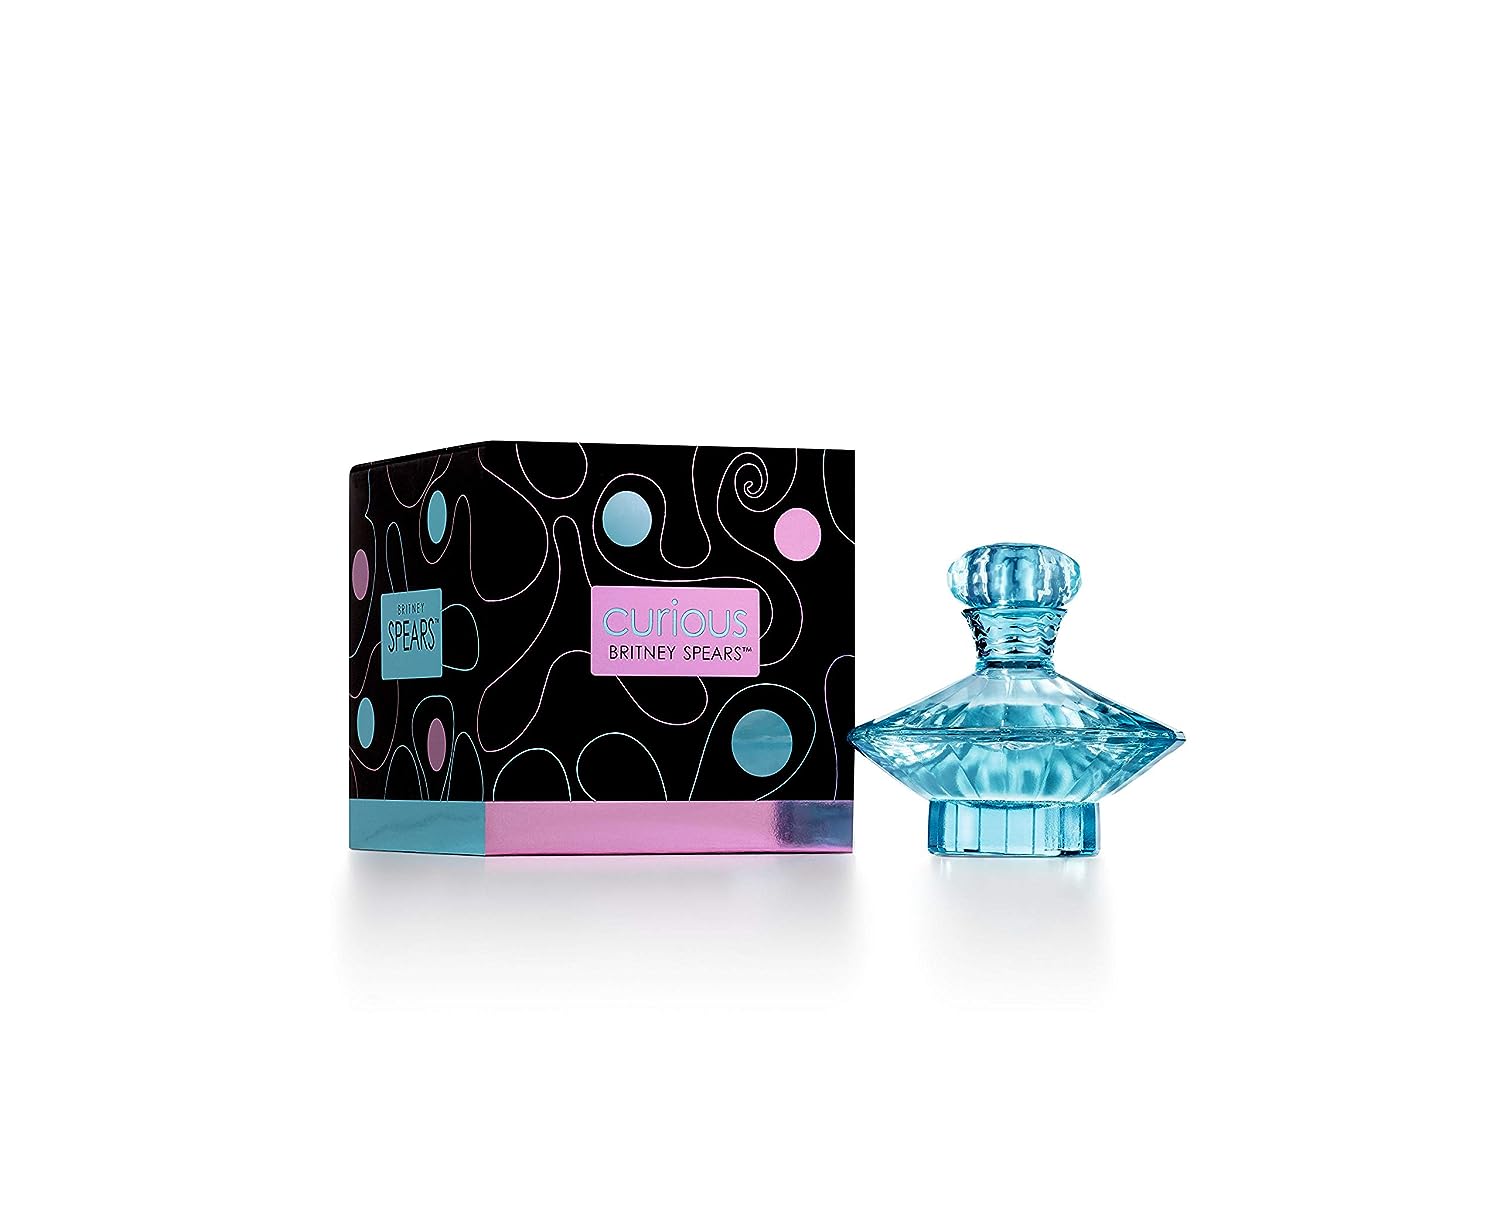 Britney Spears Women's Perfume, Curious, Eau De Parfum EDP Spray for Women, 1 Fl Oz - Premium perfume from Concordia Style Boutique - Just $20.62! Shop now at Concordia Style Boutique